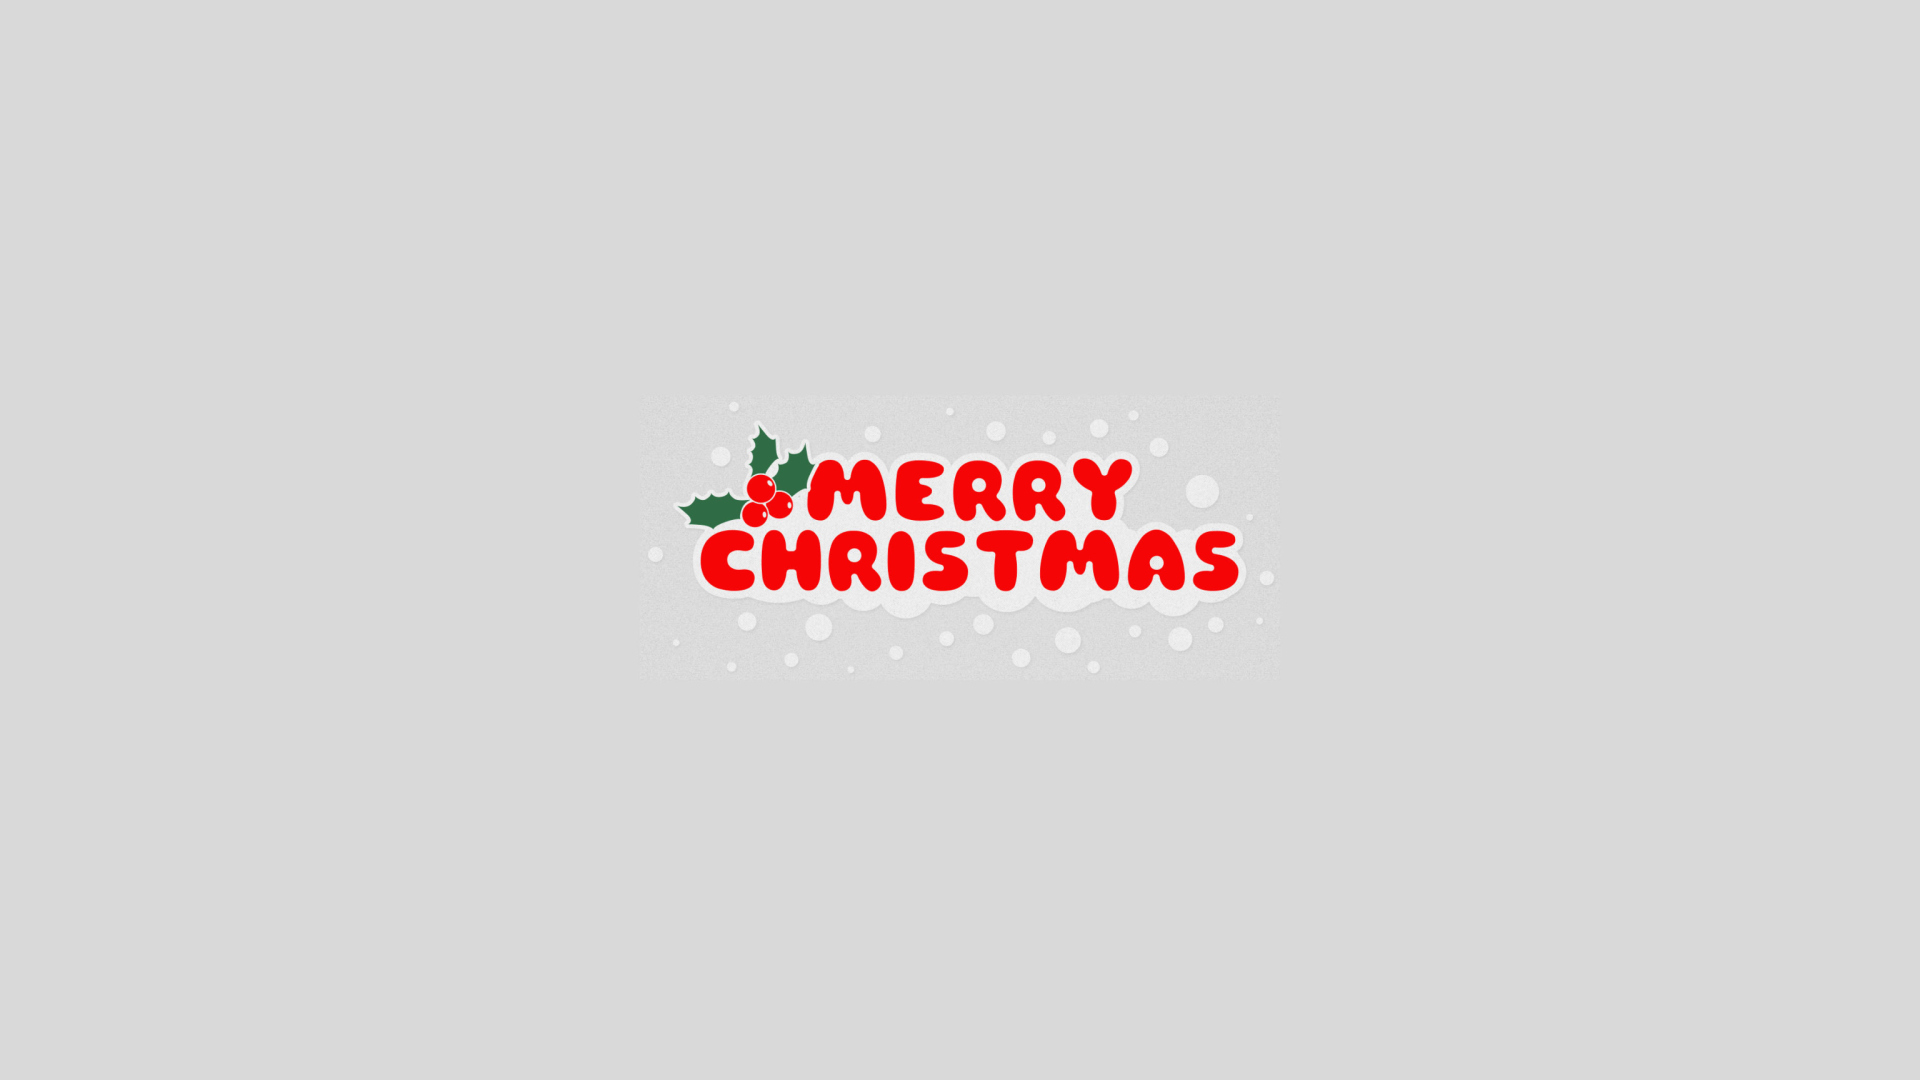 Merry Christmas Greeting wallpaper 1920x1080